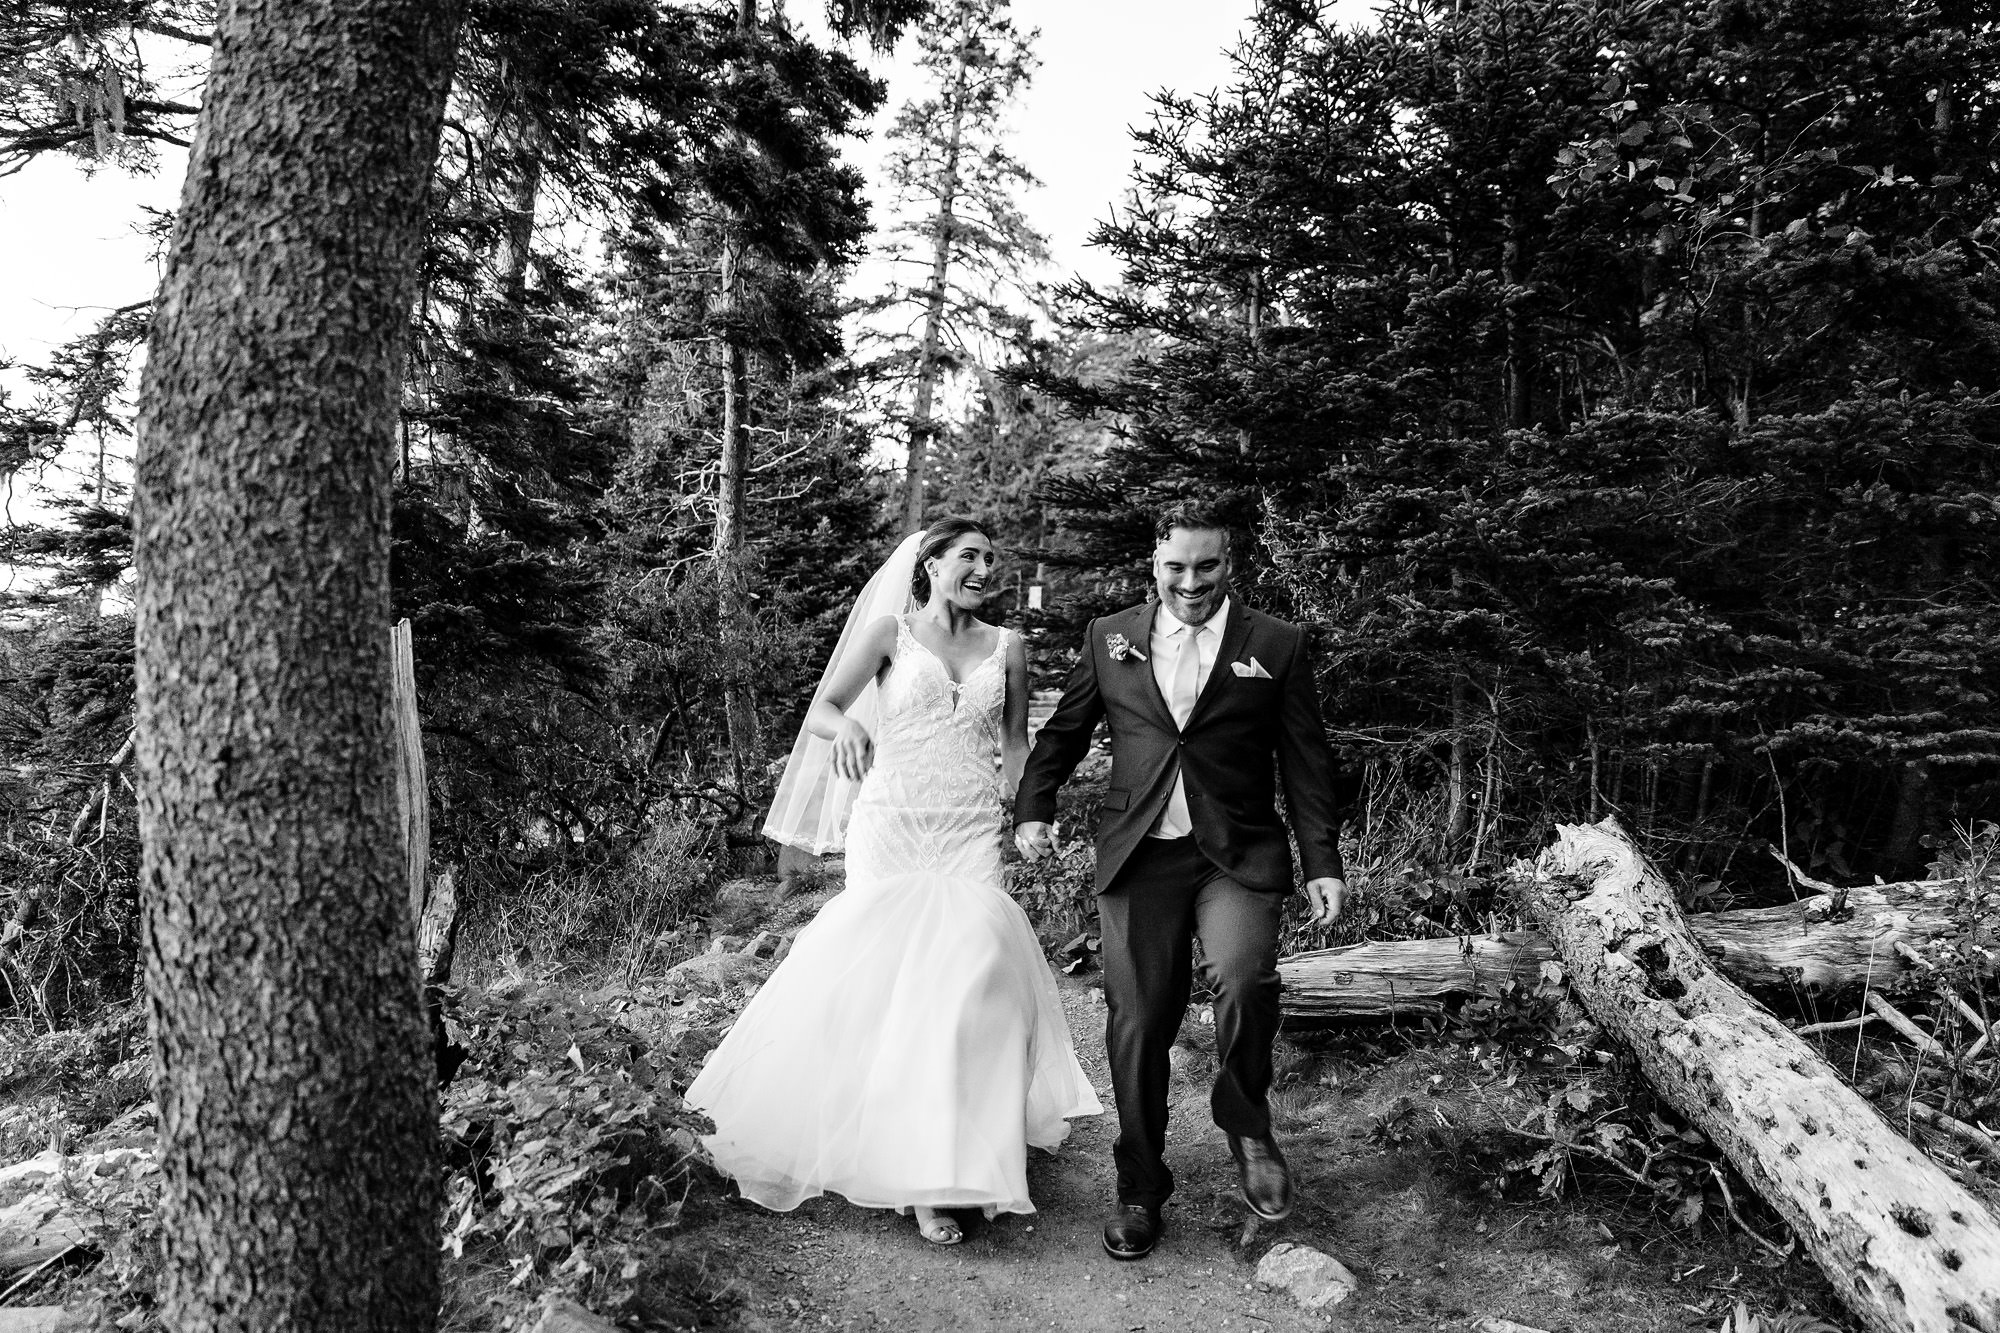 Creative wedding portraits in Acadia National Park